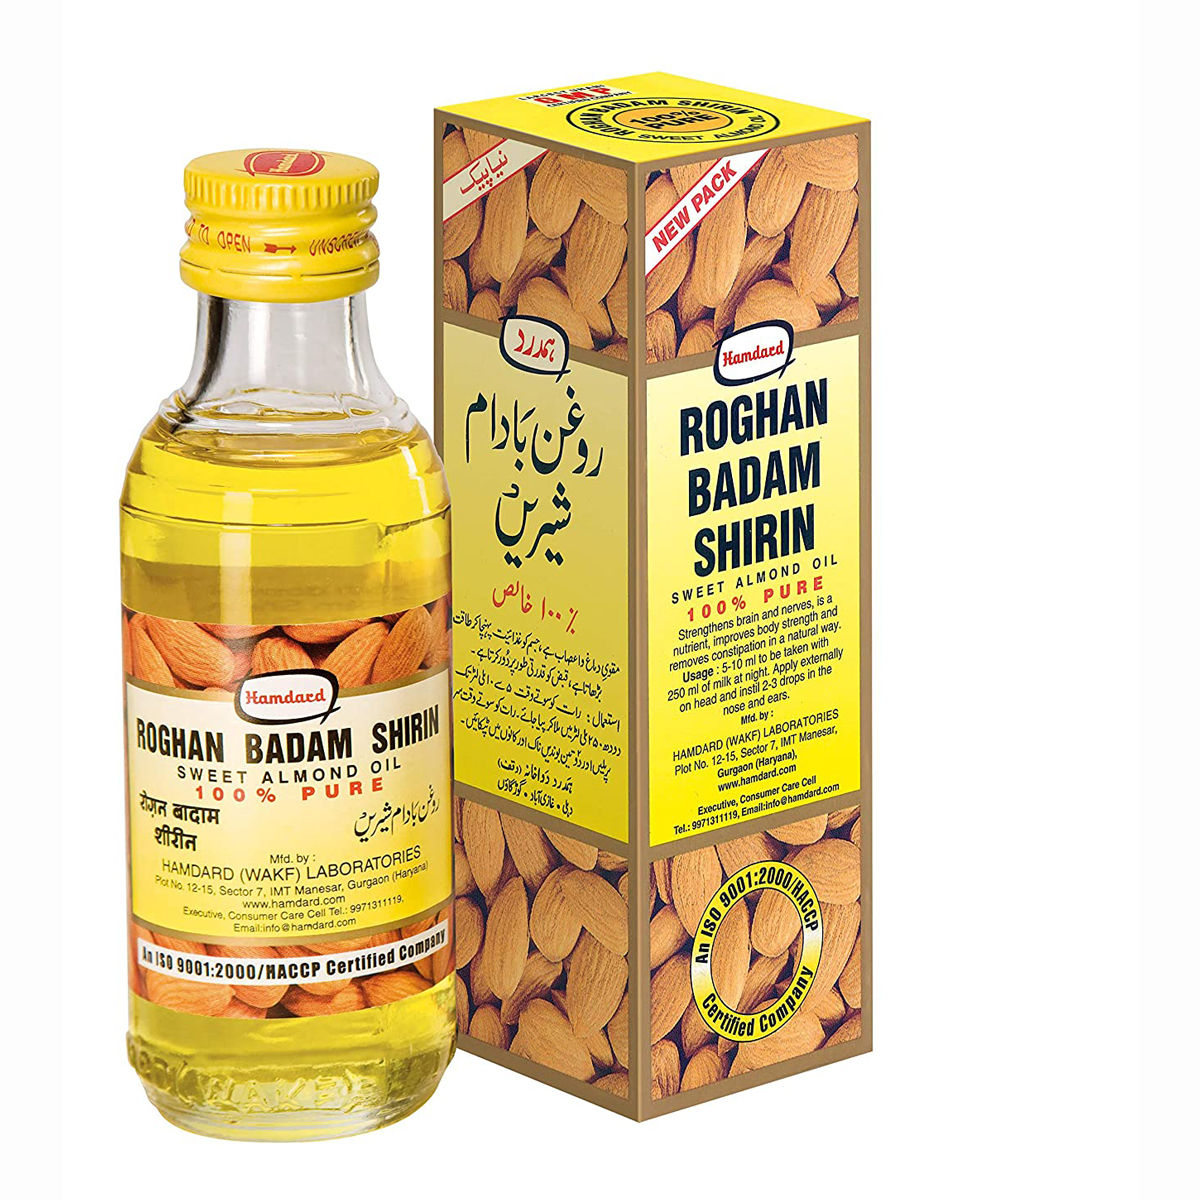 Hamdard Roghan Badam Shirin Almond Oil, 25 ml, Pack of 1 